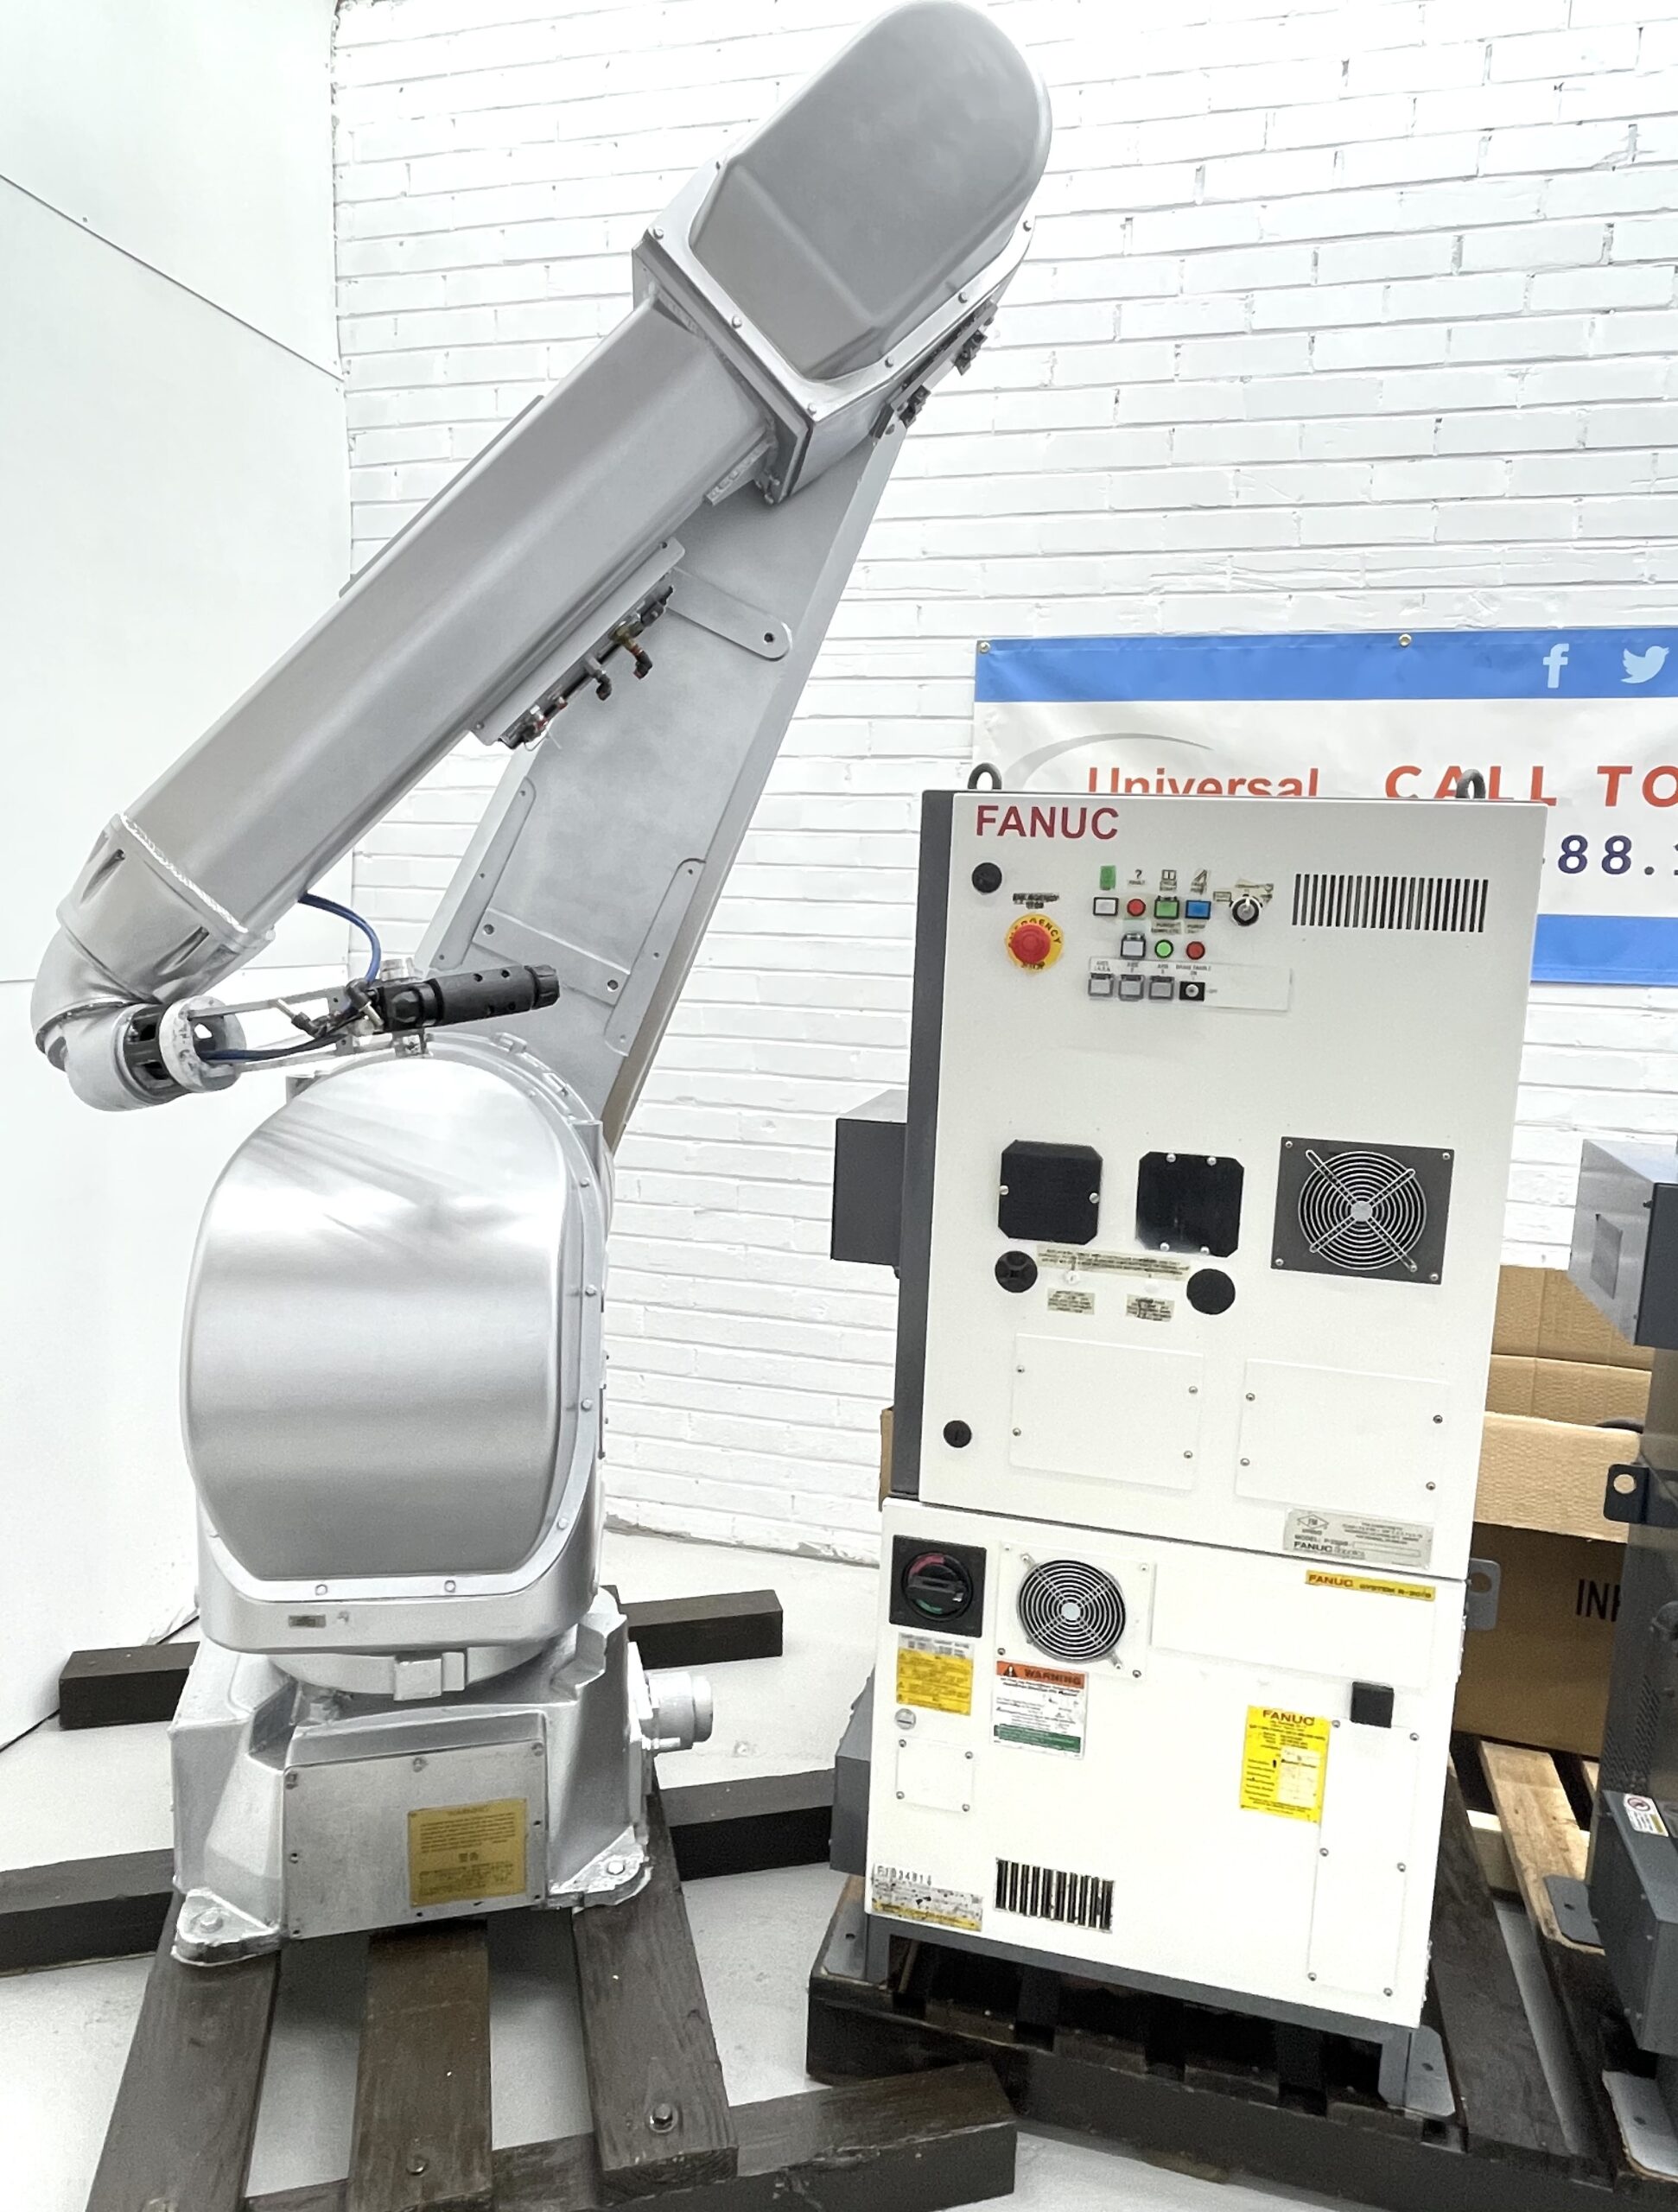 Fanuc industrial robot